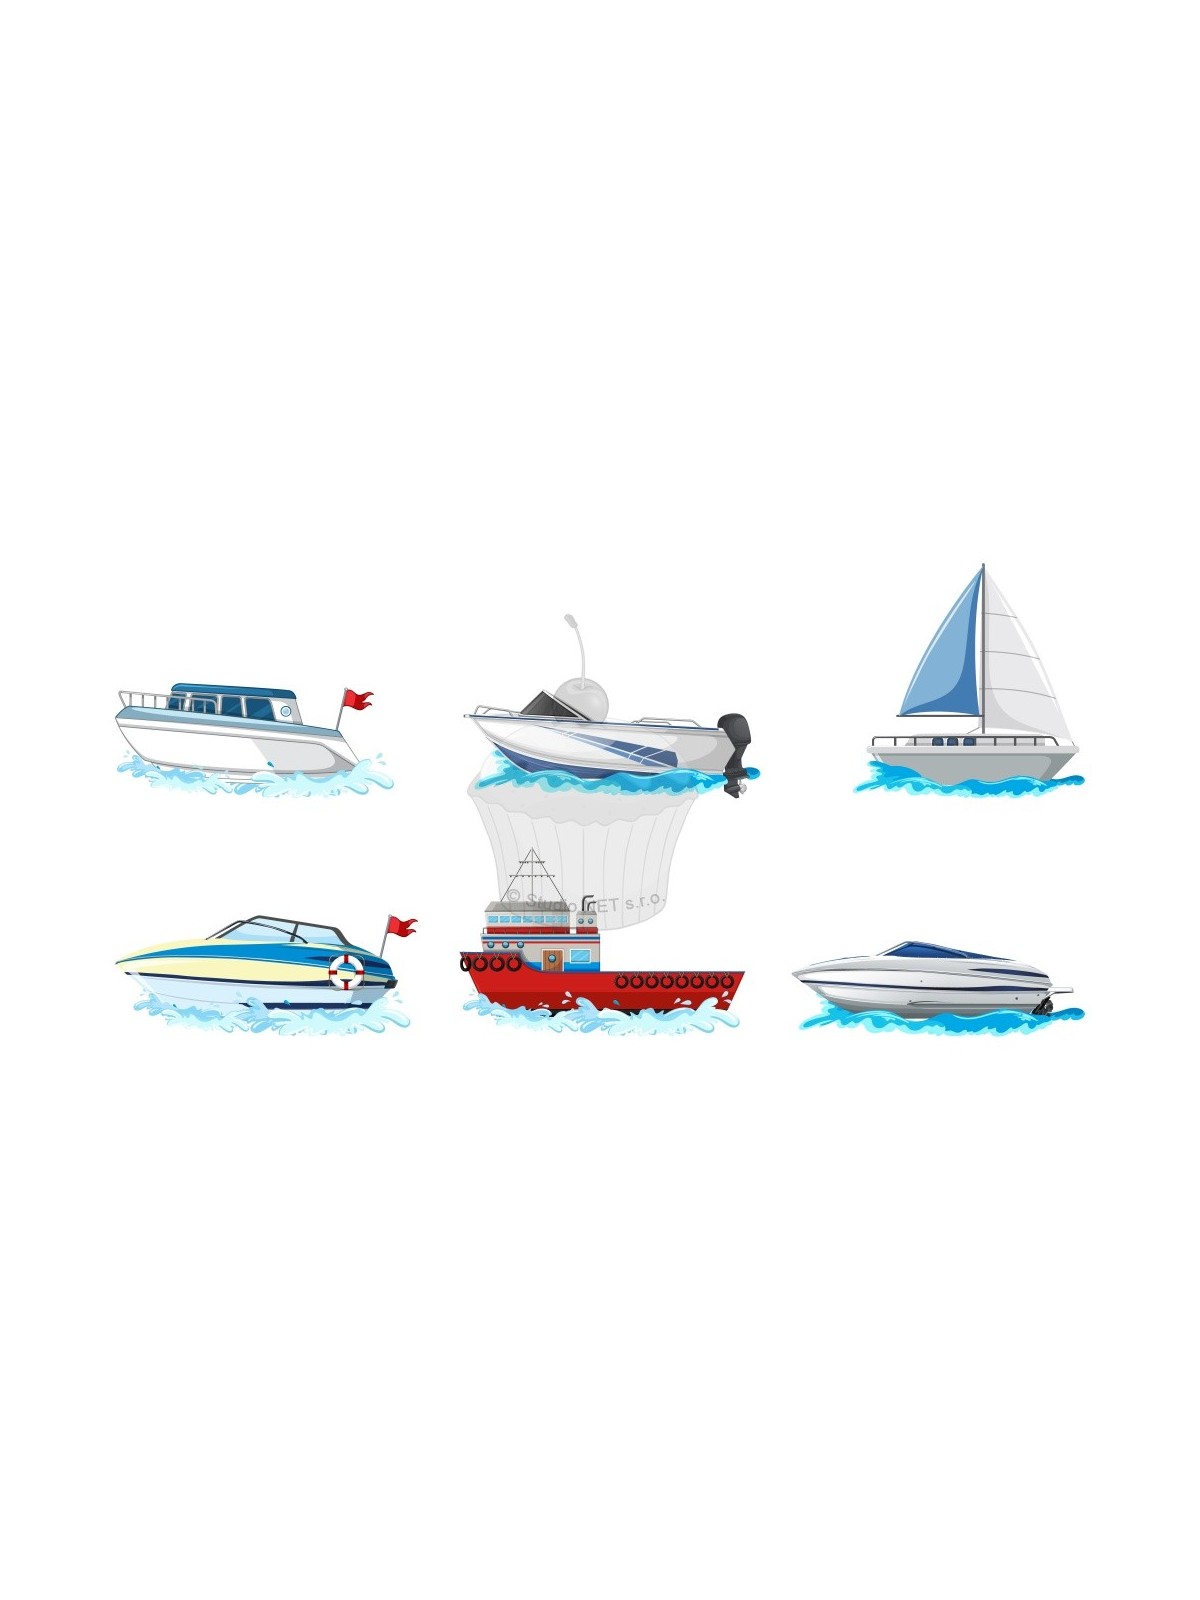 Edible paper "Motor boats" A4